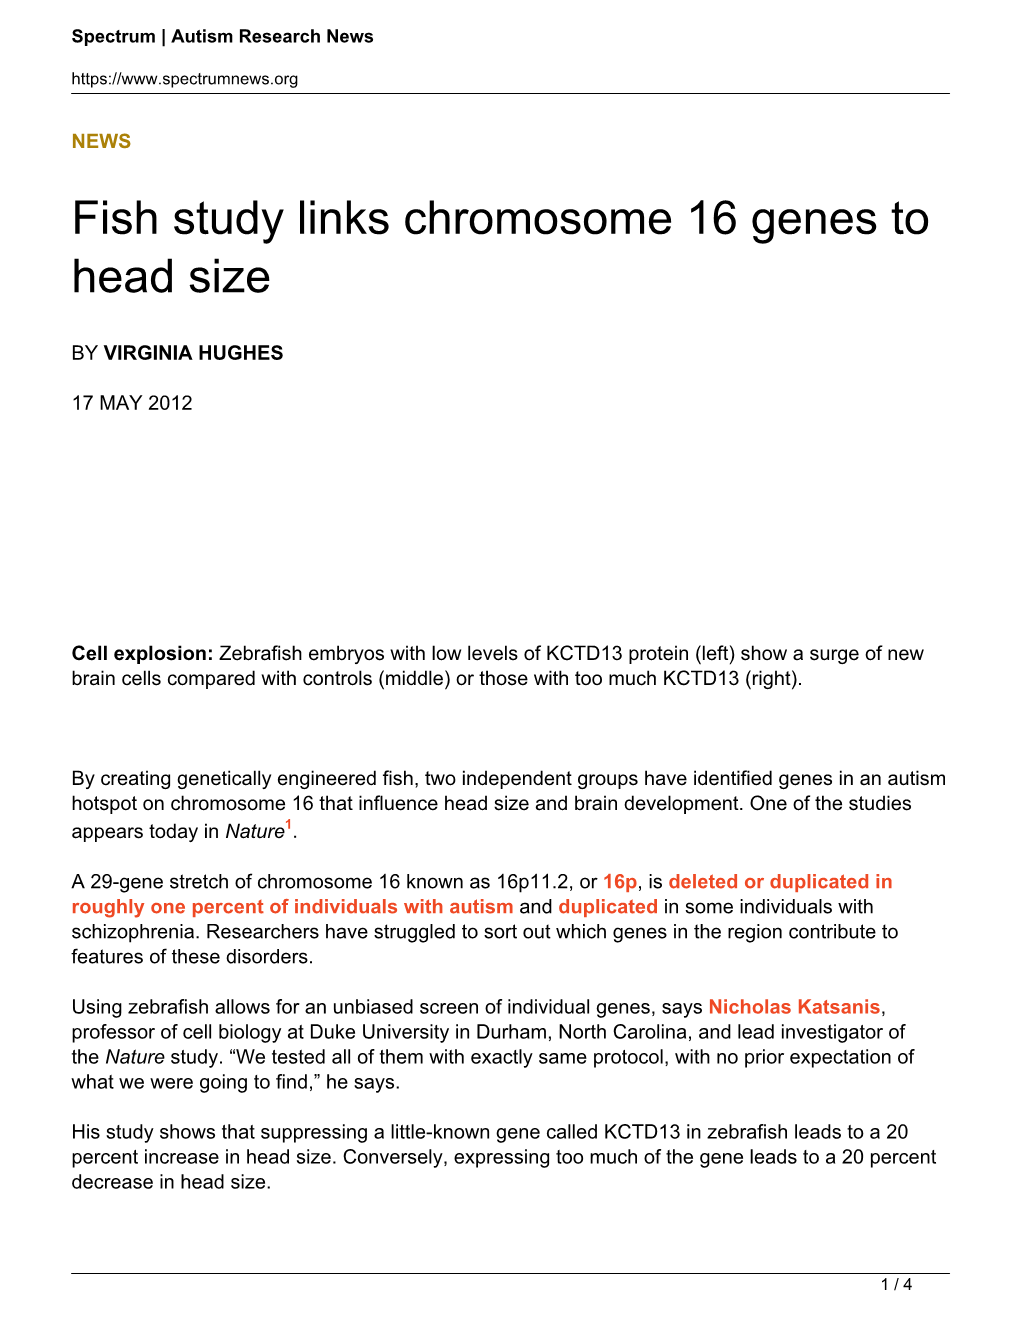 Fish Study Links Chromosome 16 Genes to Head Size